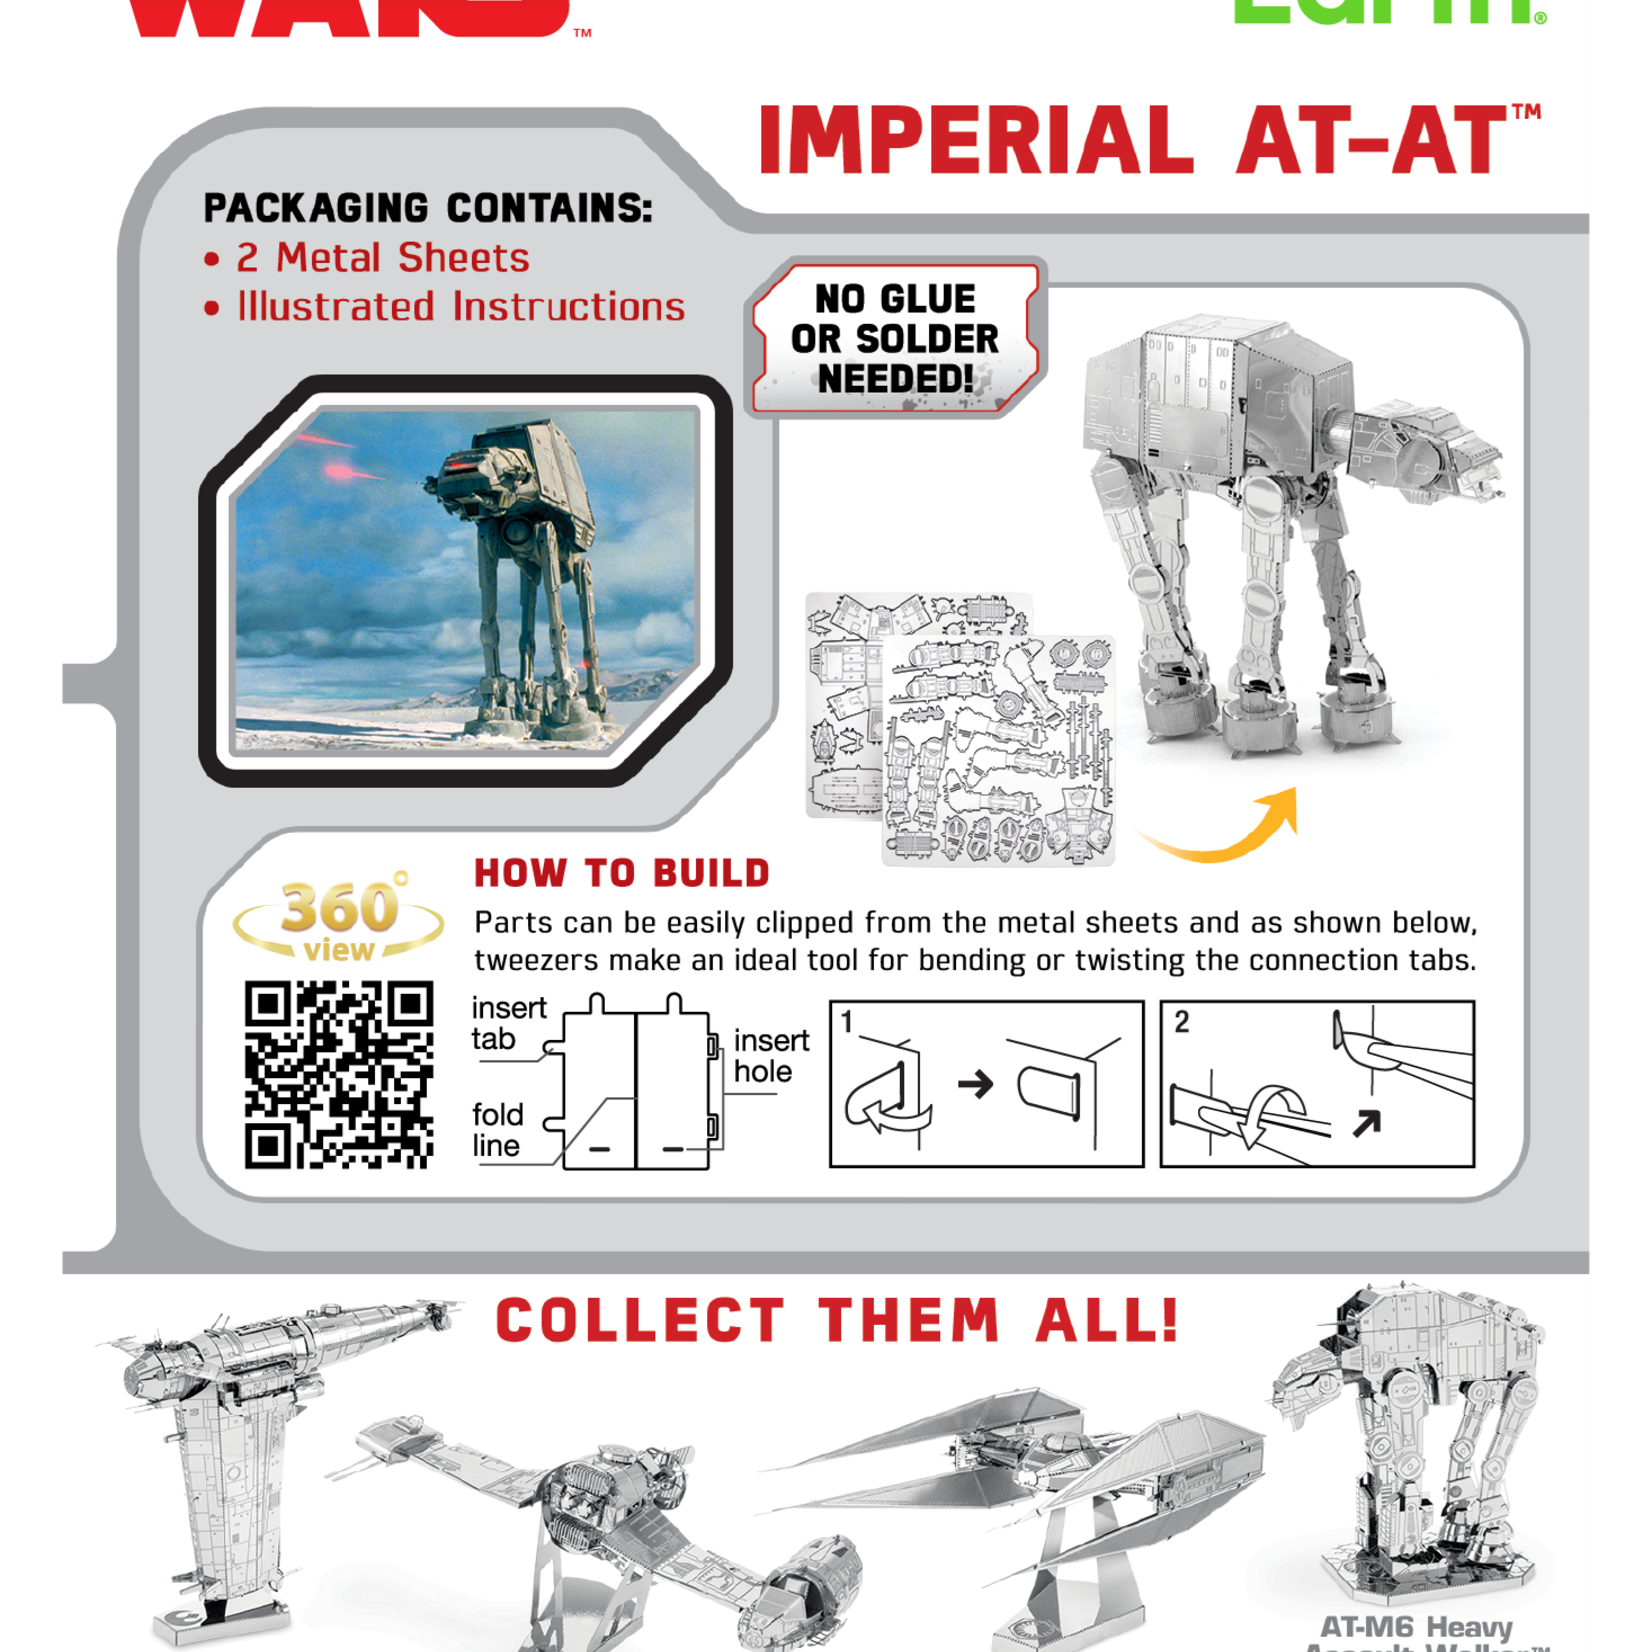 Metal Earth Metal Earth - Star Wars : Imperial AT-AT